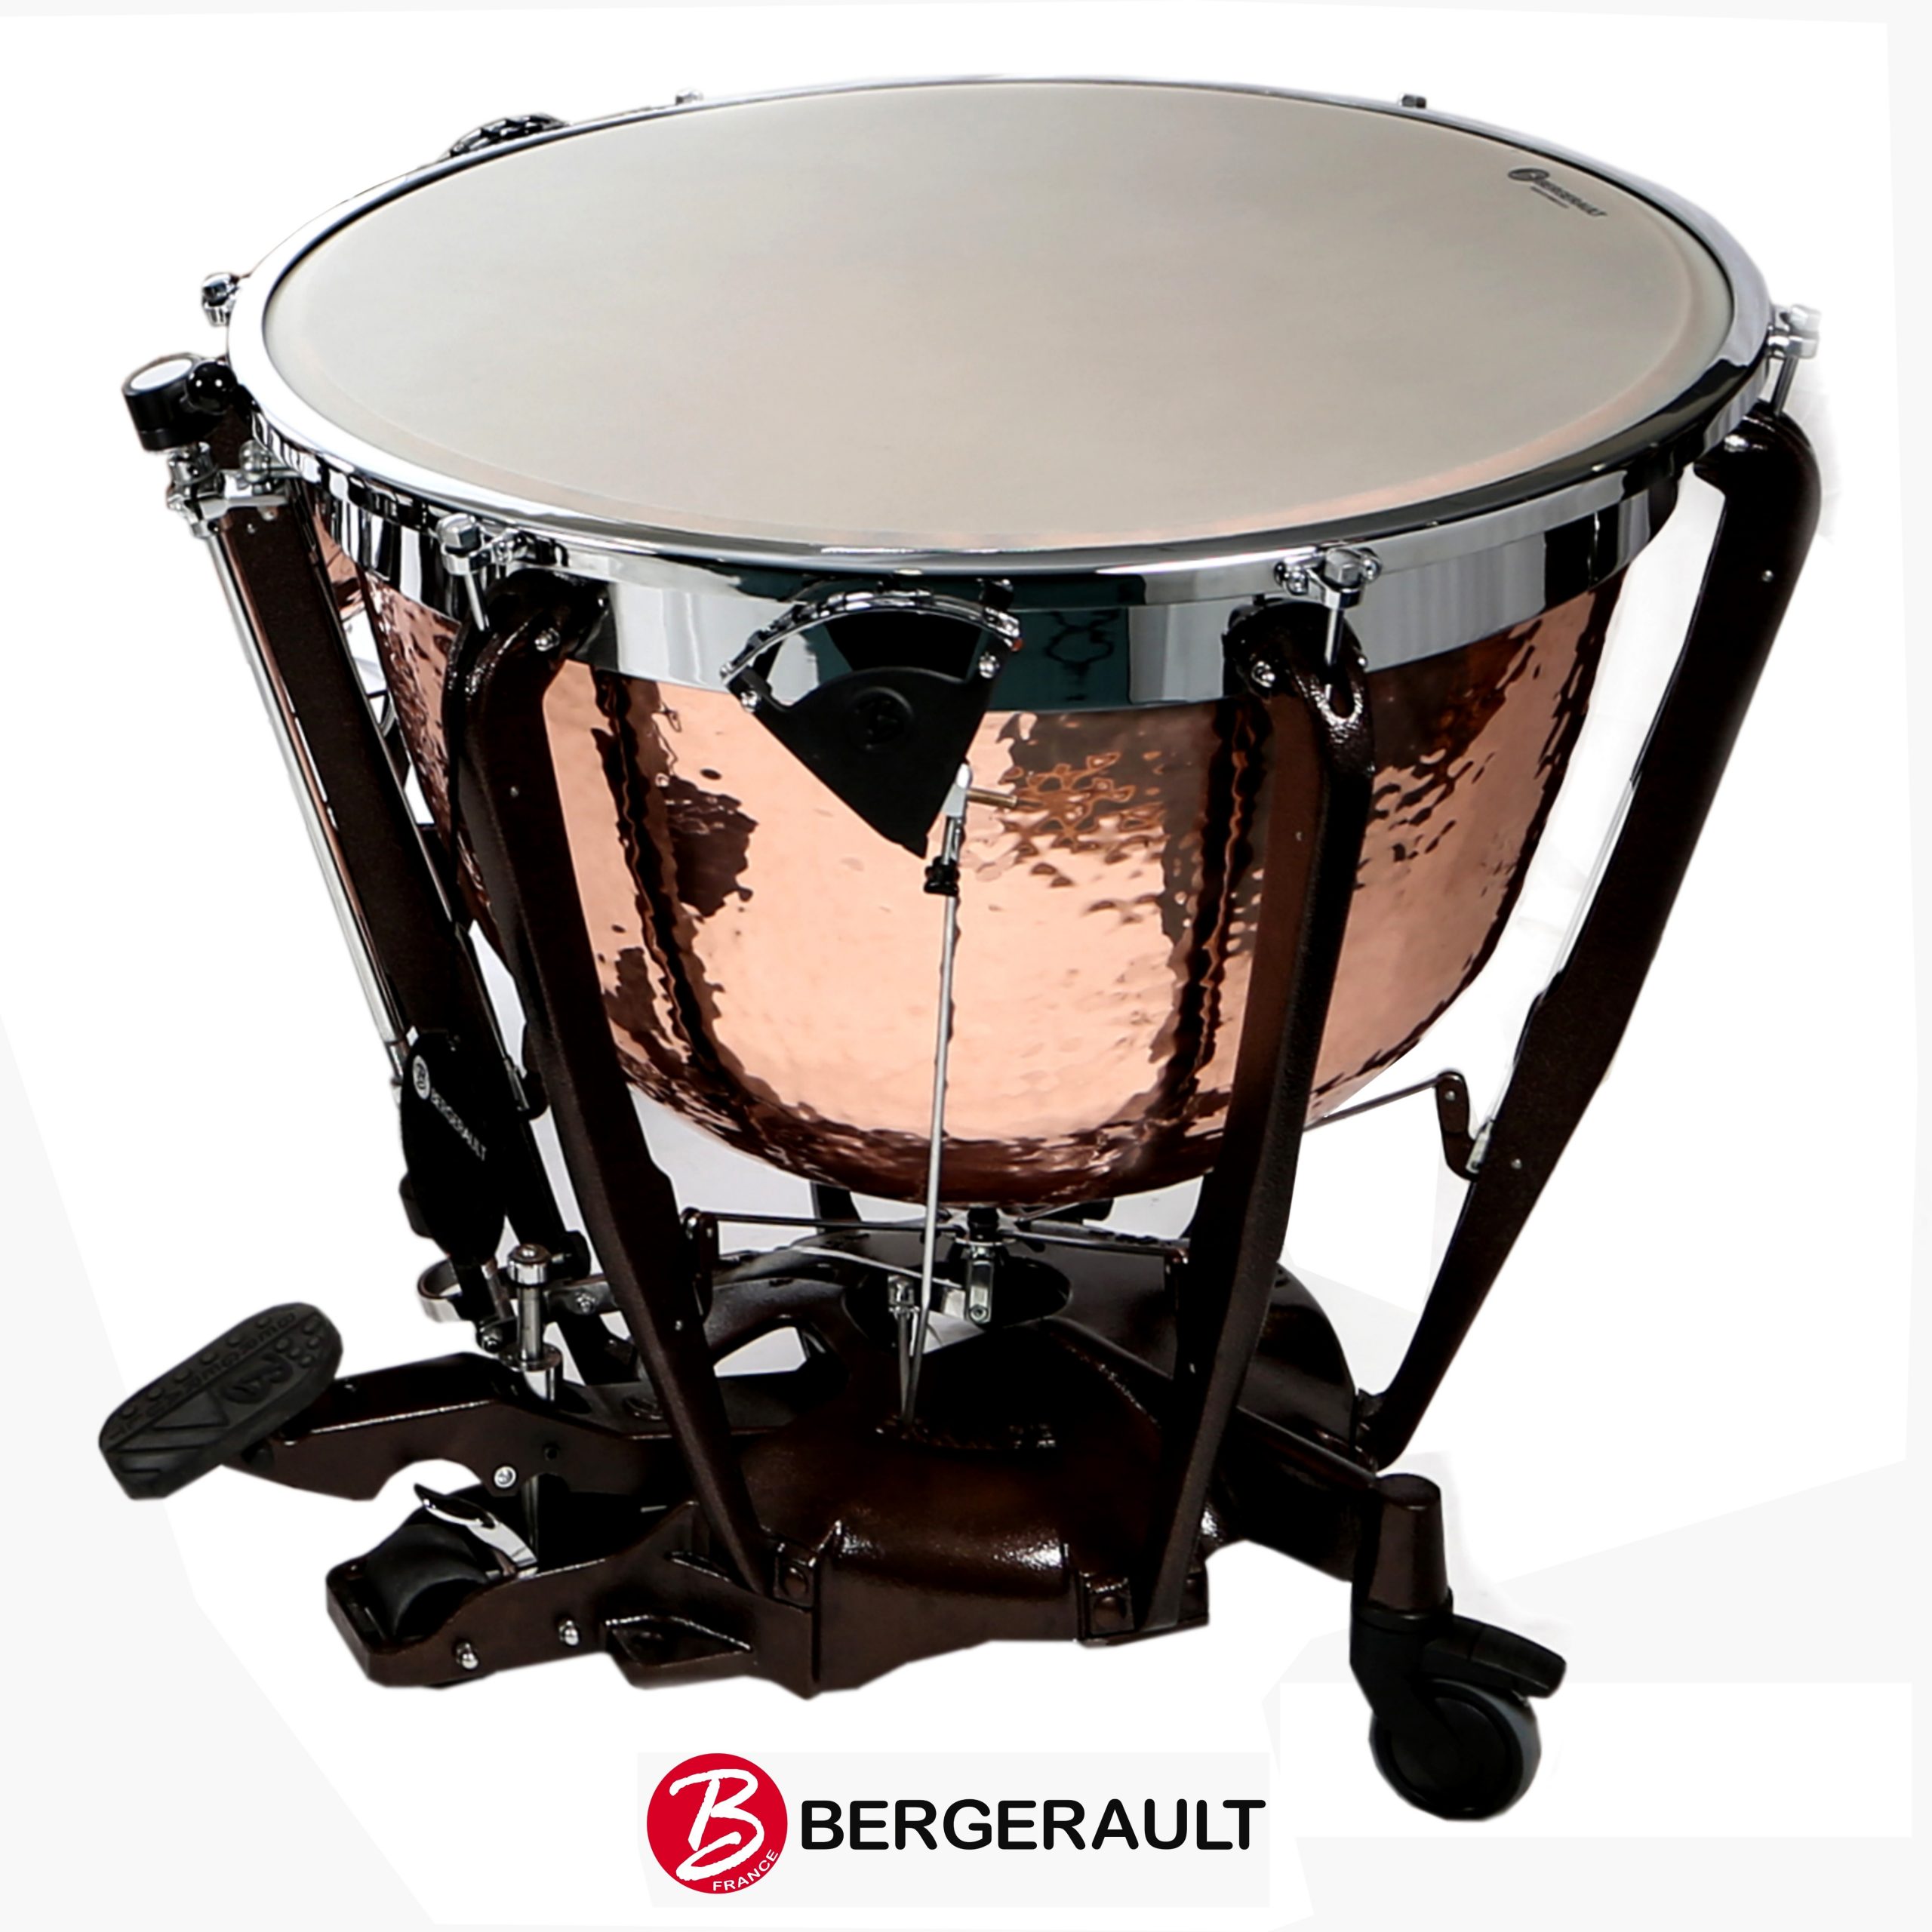 Bergerault Timpani Grand Symphonic Ø 23" cambered copper hand hammered